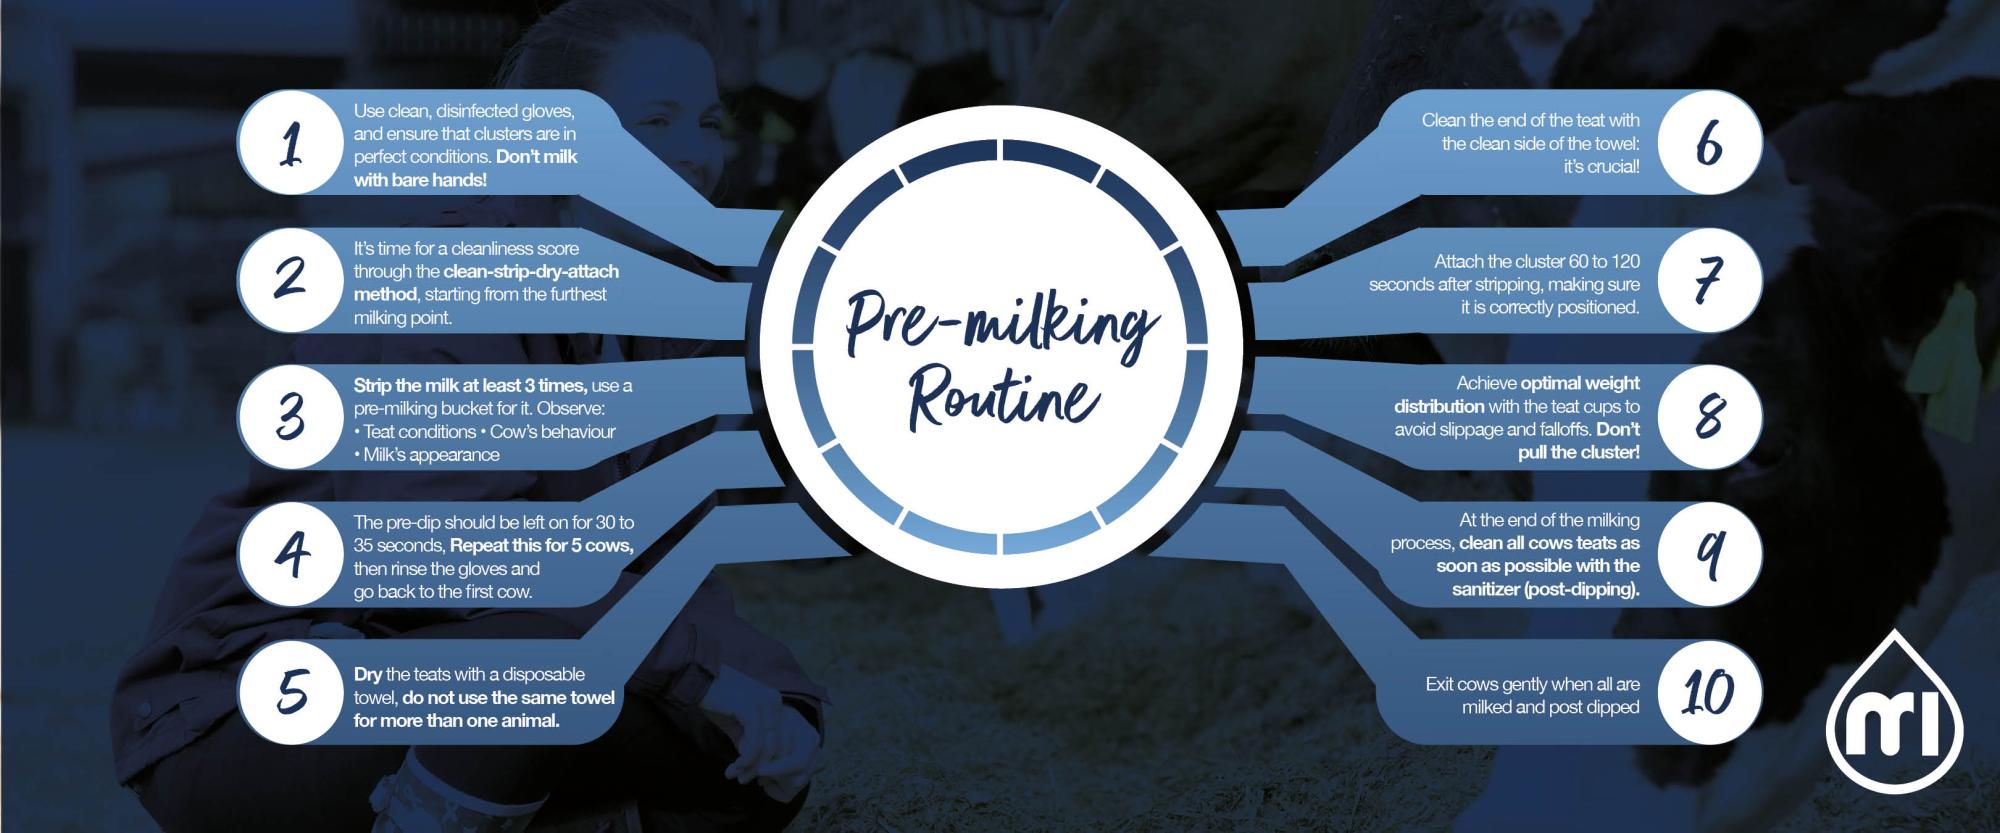 The correct pre-milking routine steps according to MI (milkrite | InterPuls)